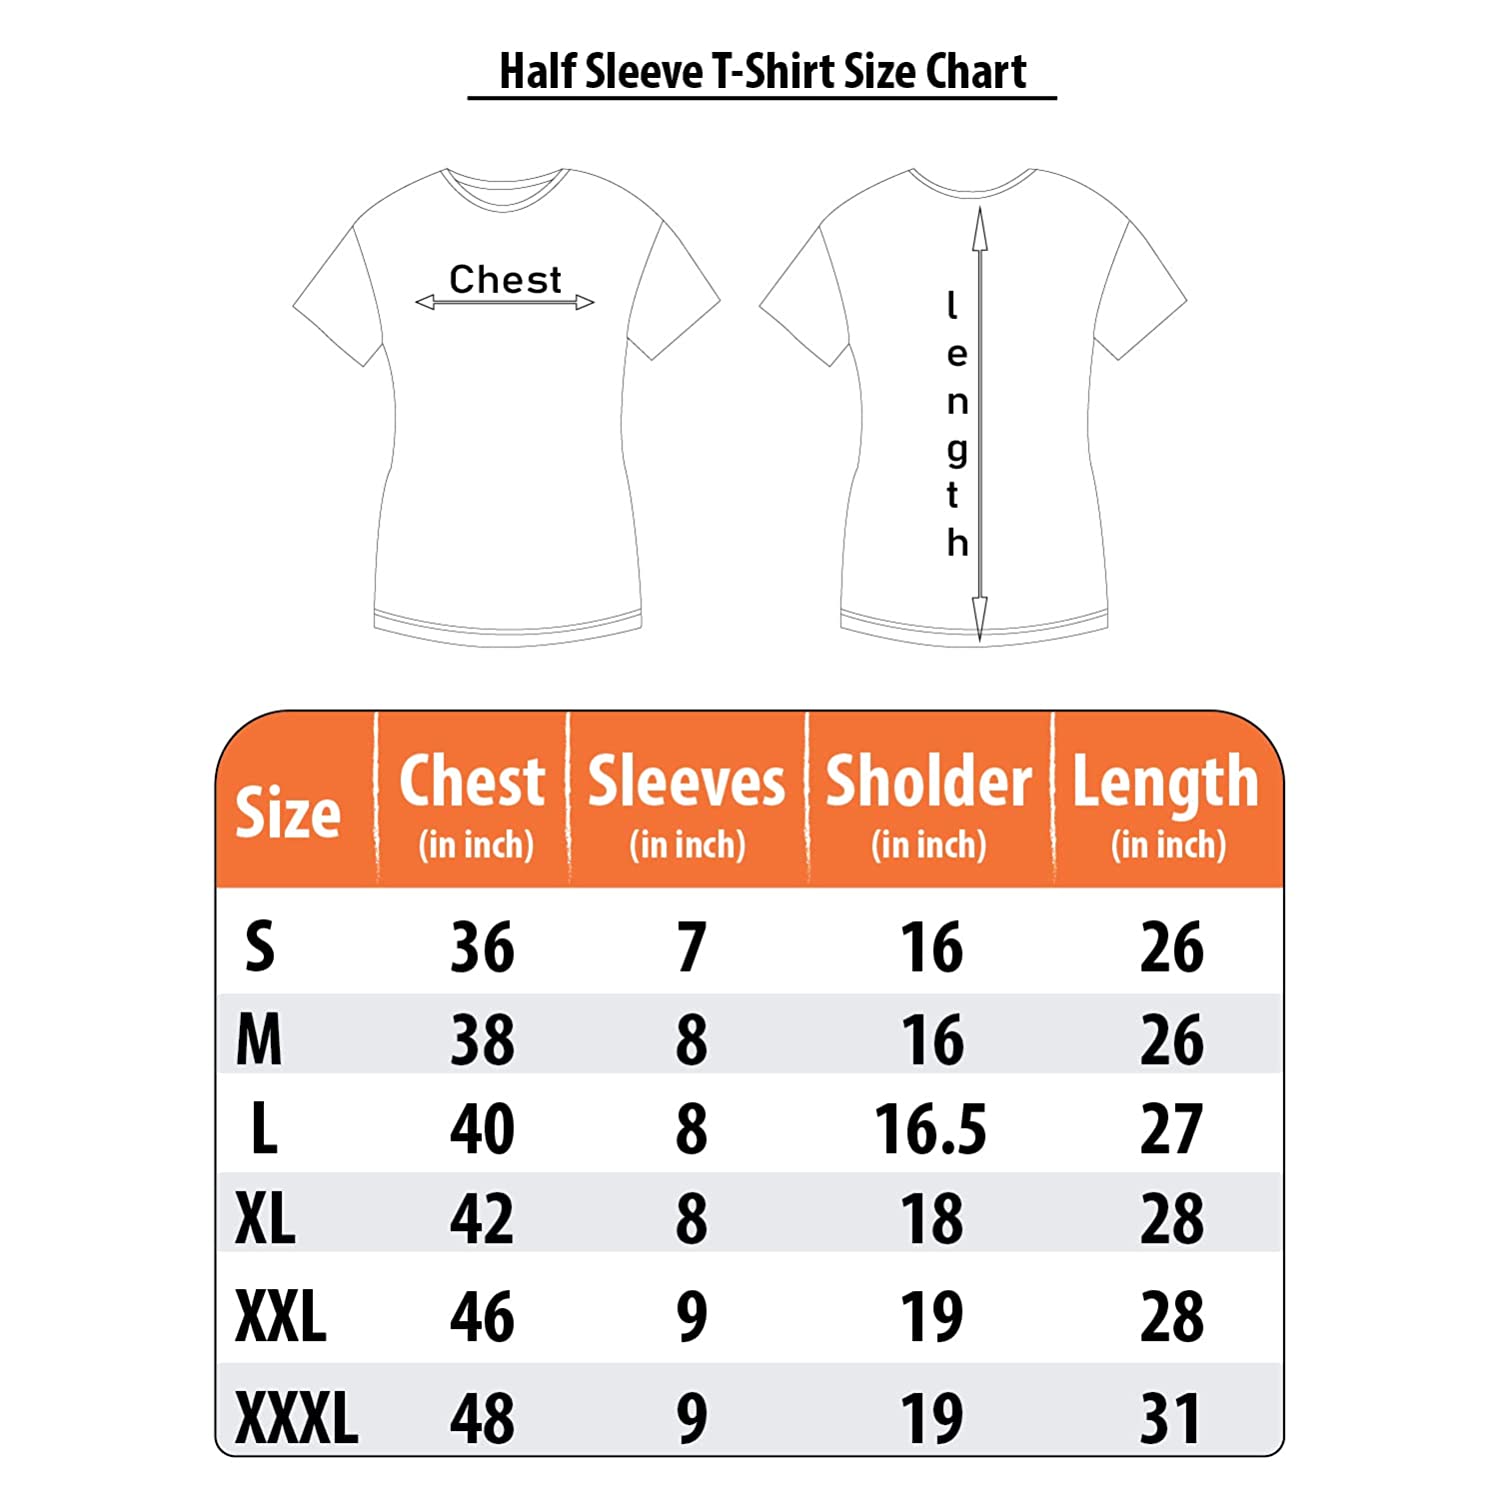 Chatrapti Shivaji Maharaj Hindu Raj Graphic Printed T-Shirt for Men's  | Shivaji The Maratha King T-Shirts | Regular Fit Stylish Unisex Tshirt | Gift God Faith Tee | Travel | Gym